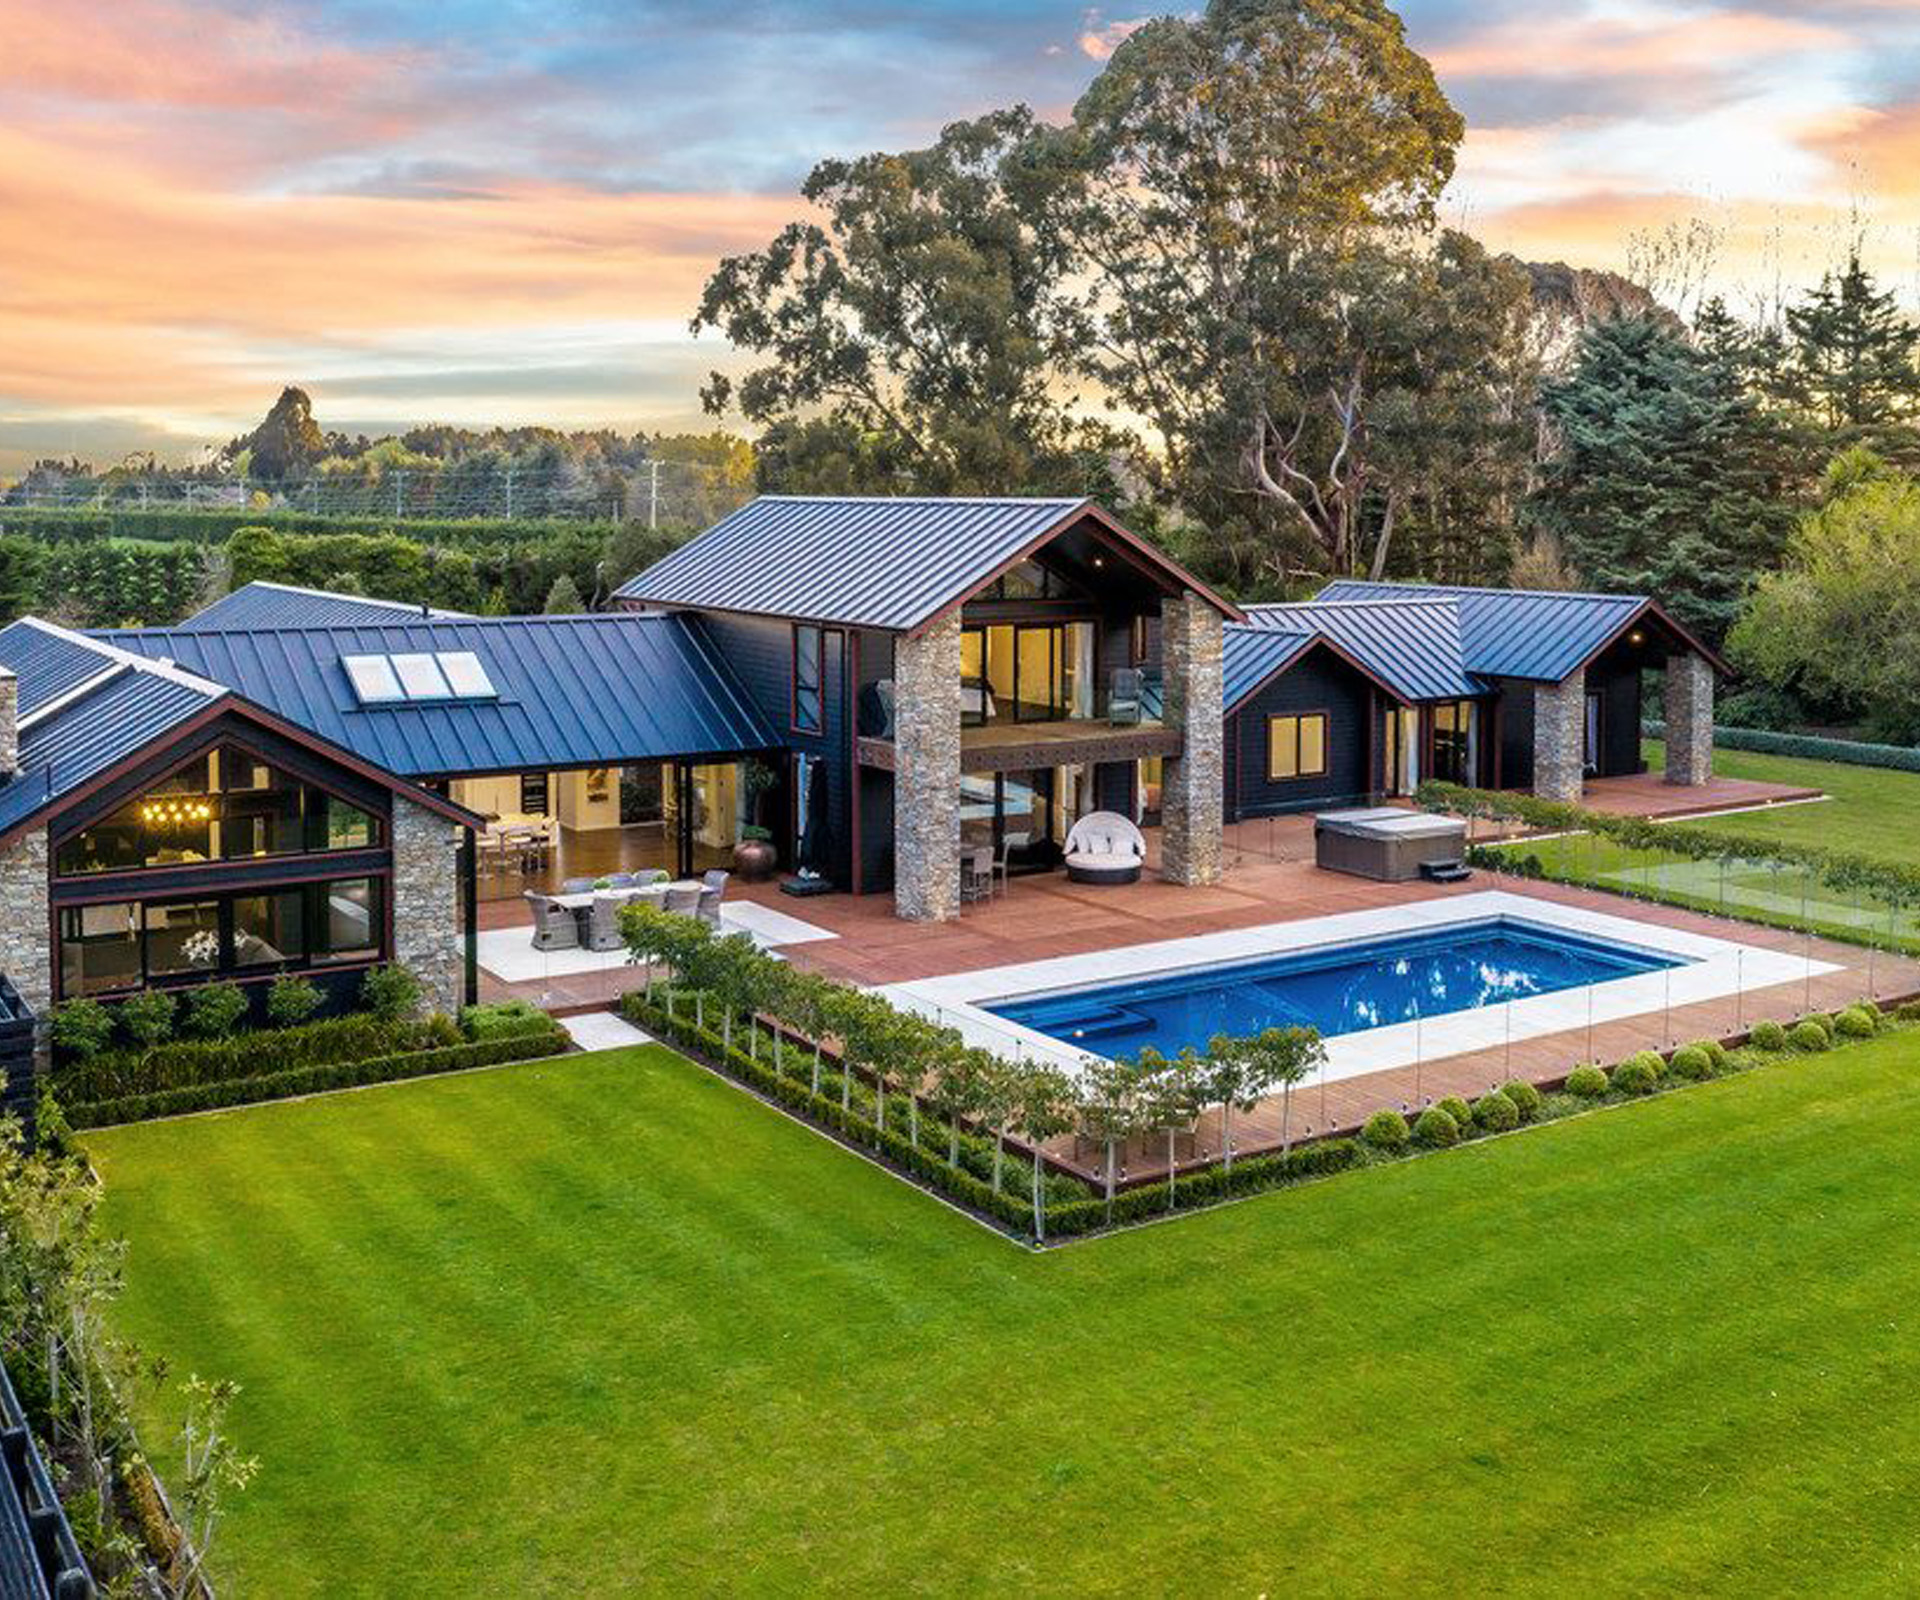 8 premium properties for sale across New Zealand right now